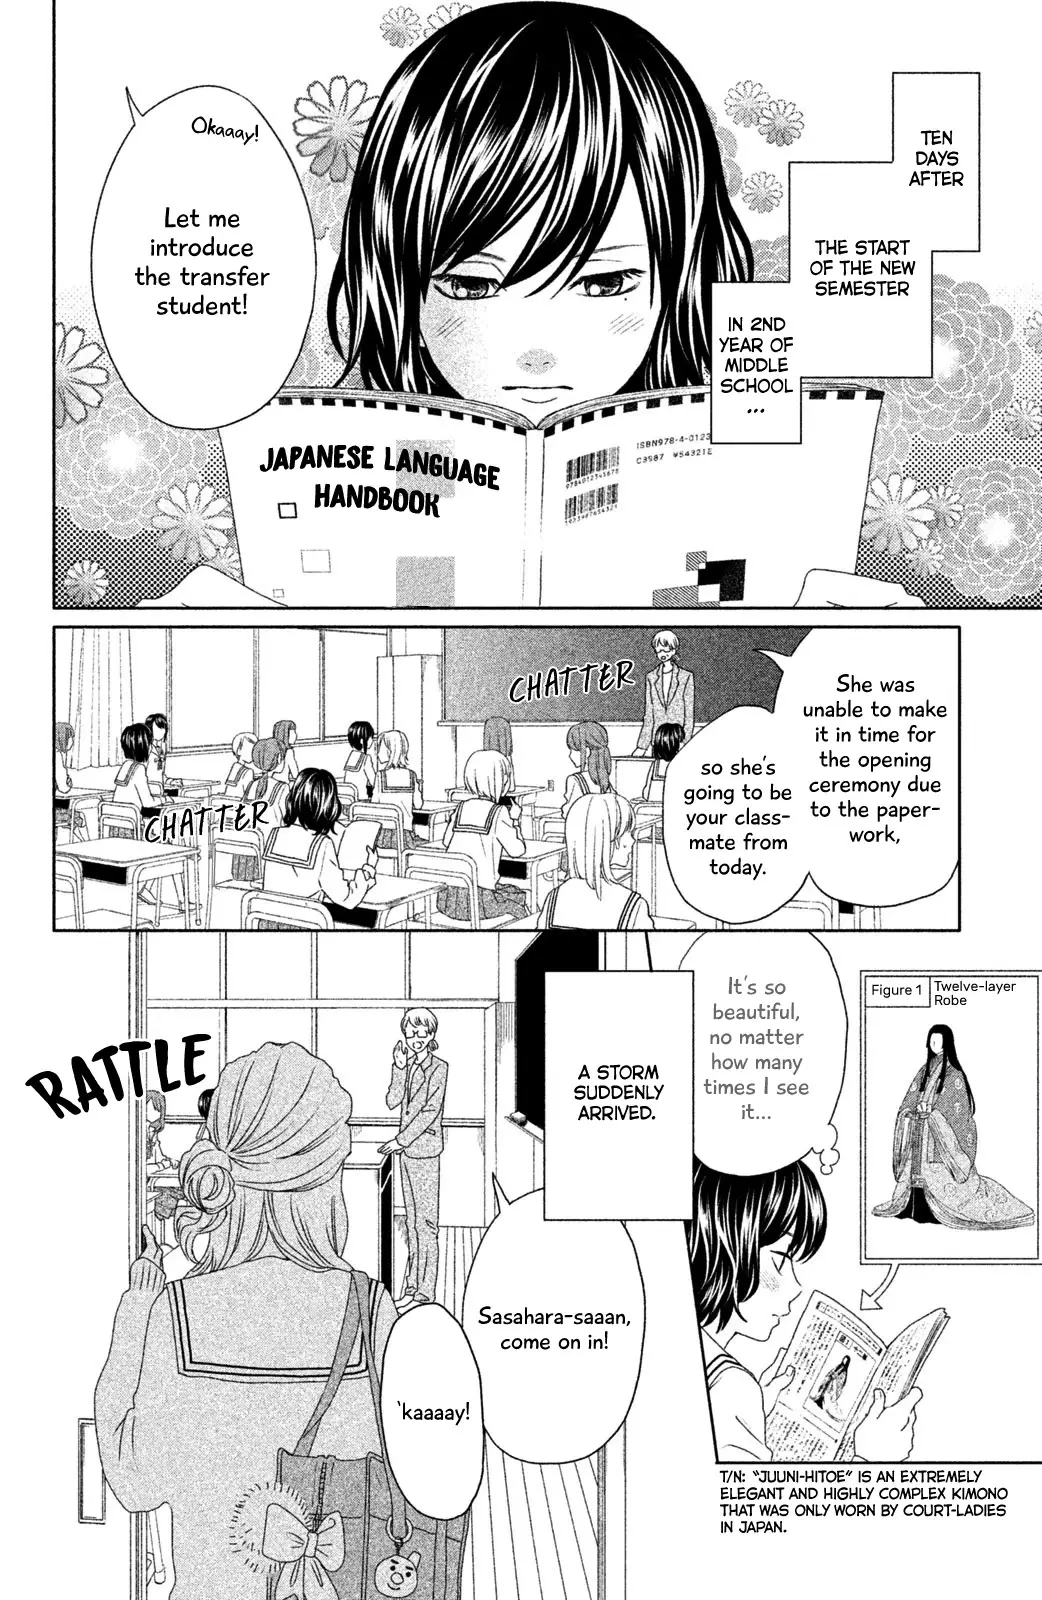 Chihayafuru: Middle School Arc - 11 page 3